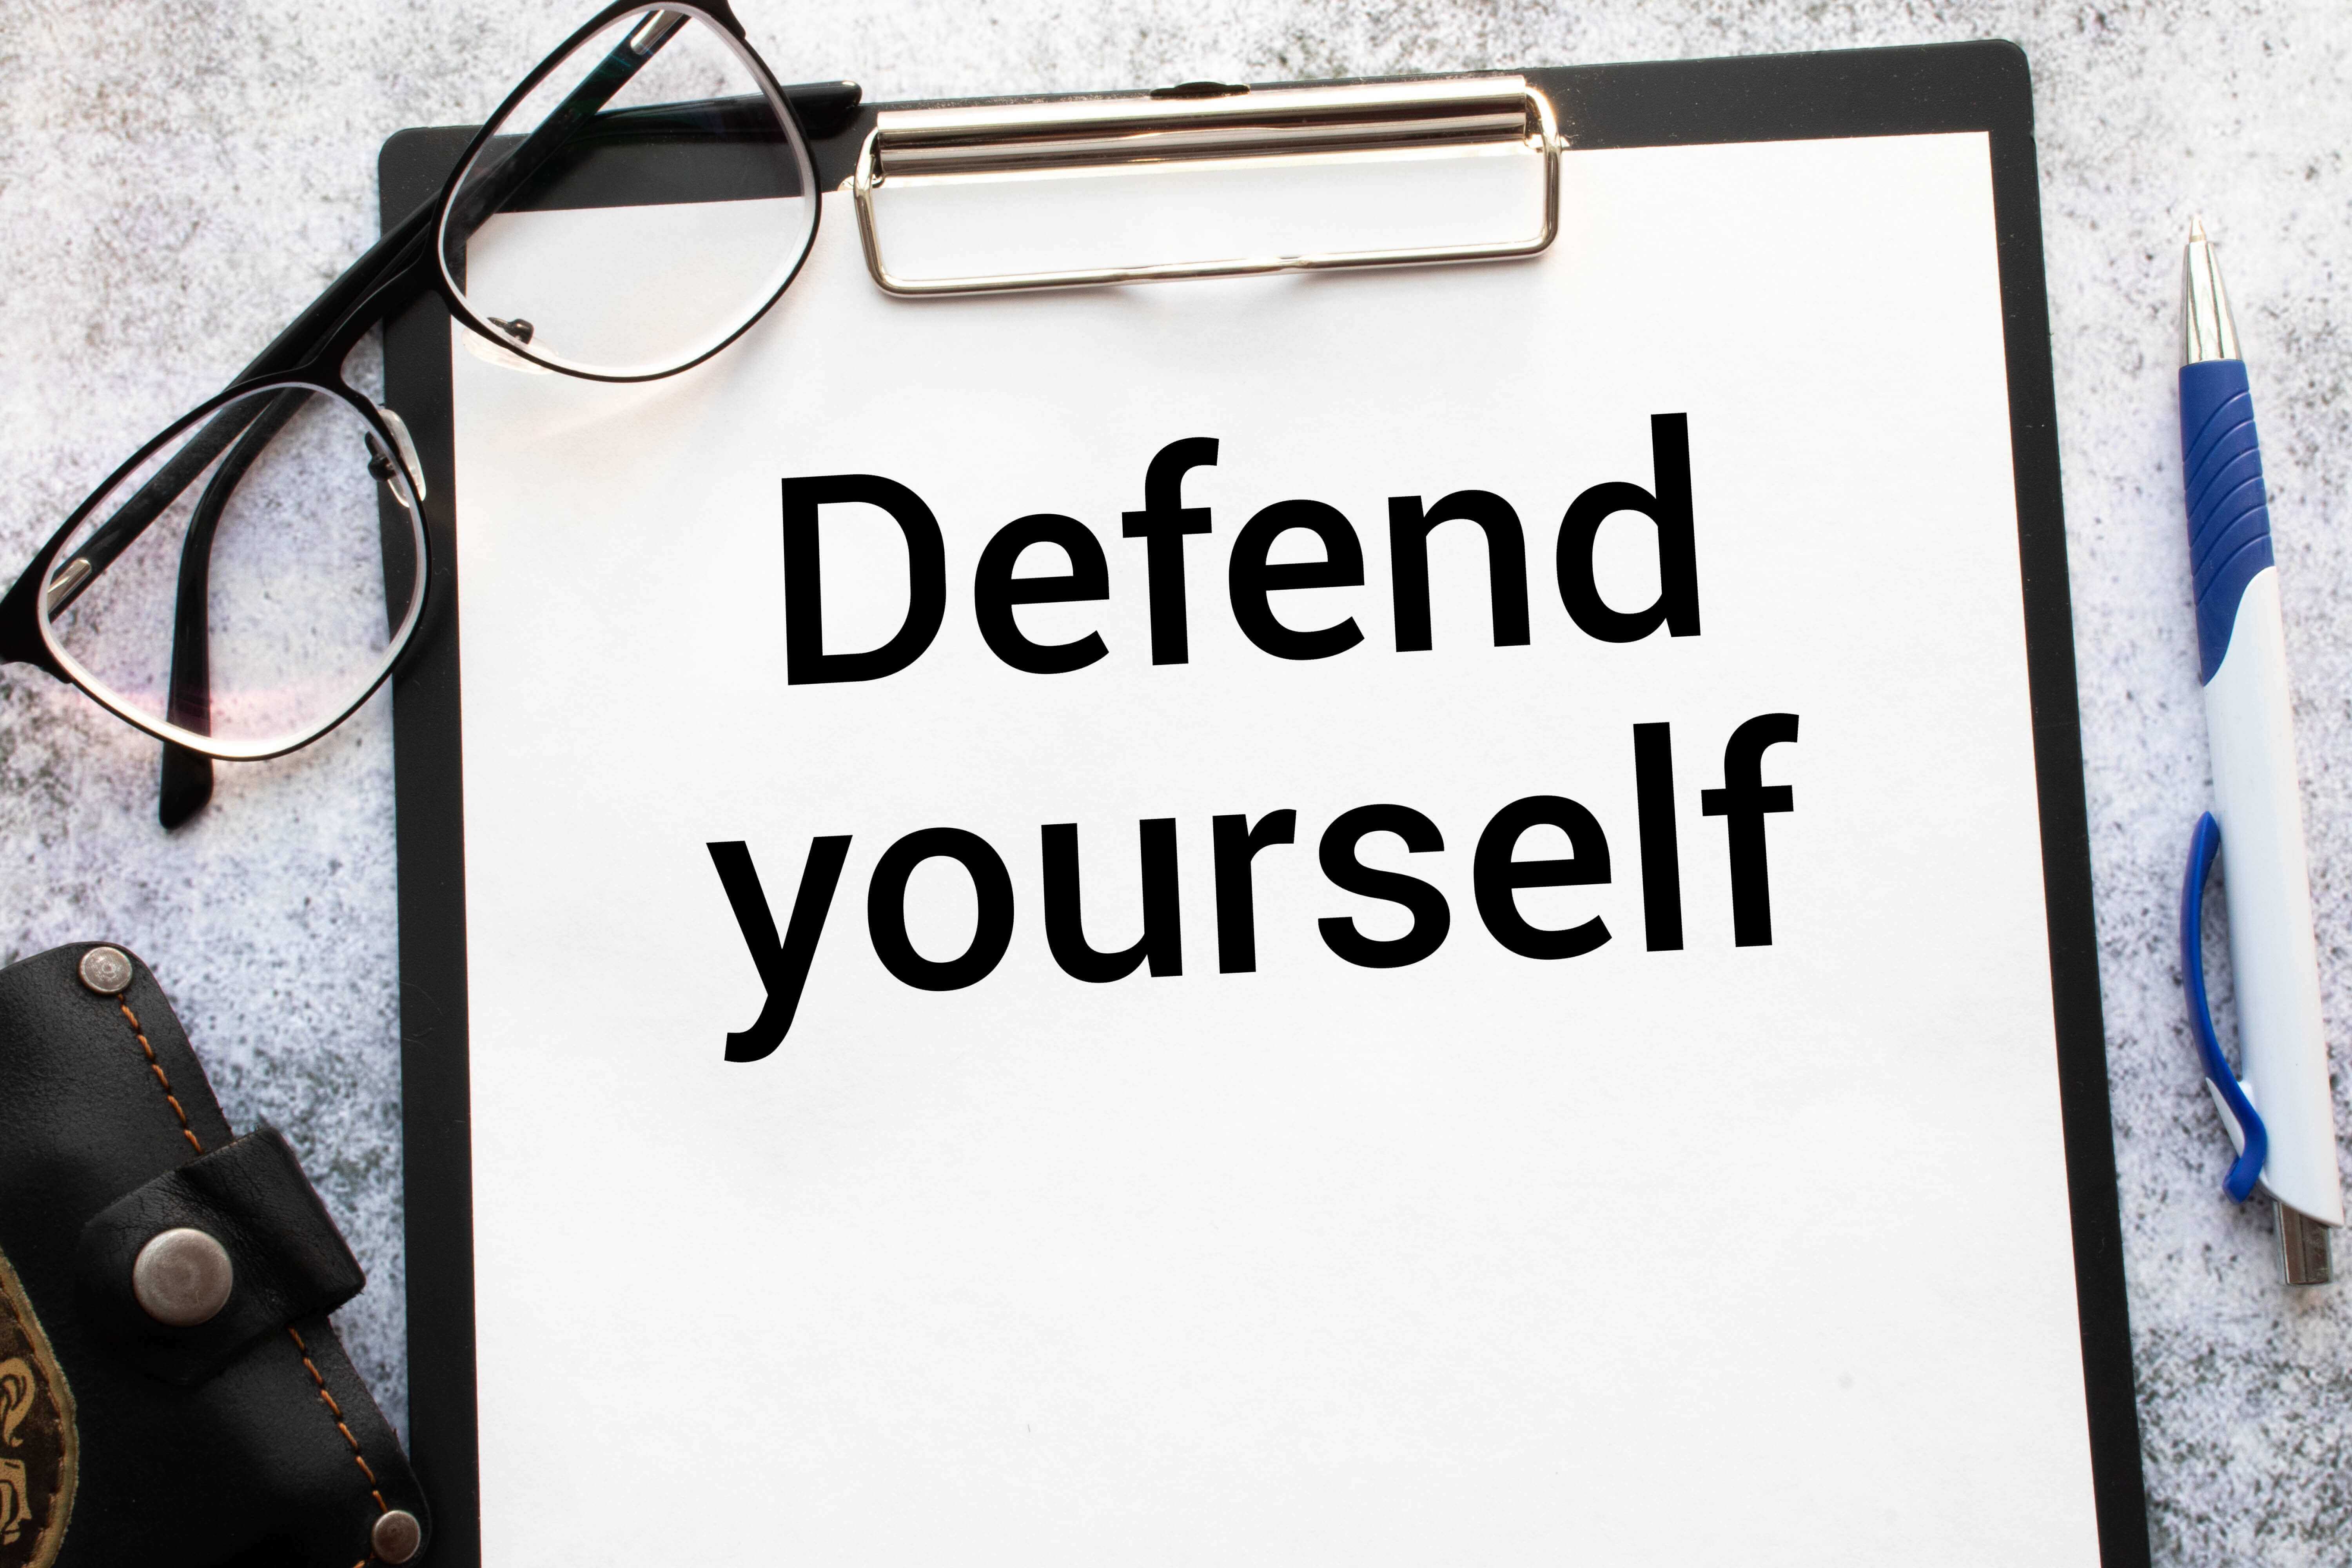 How Do You Defend Yourself?